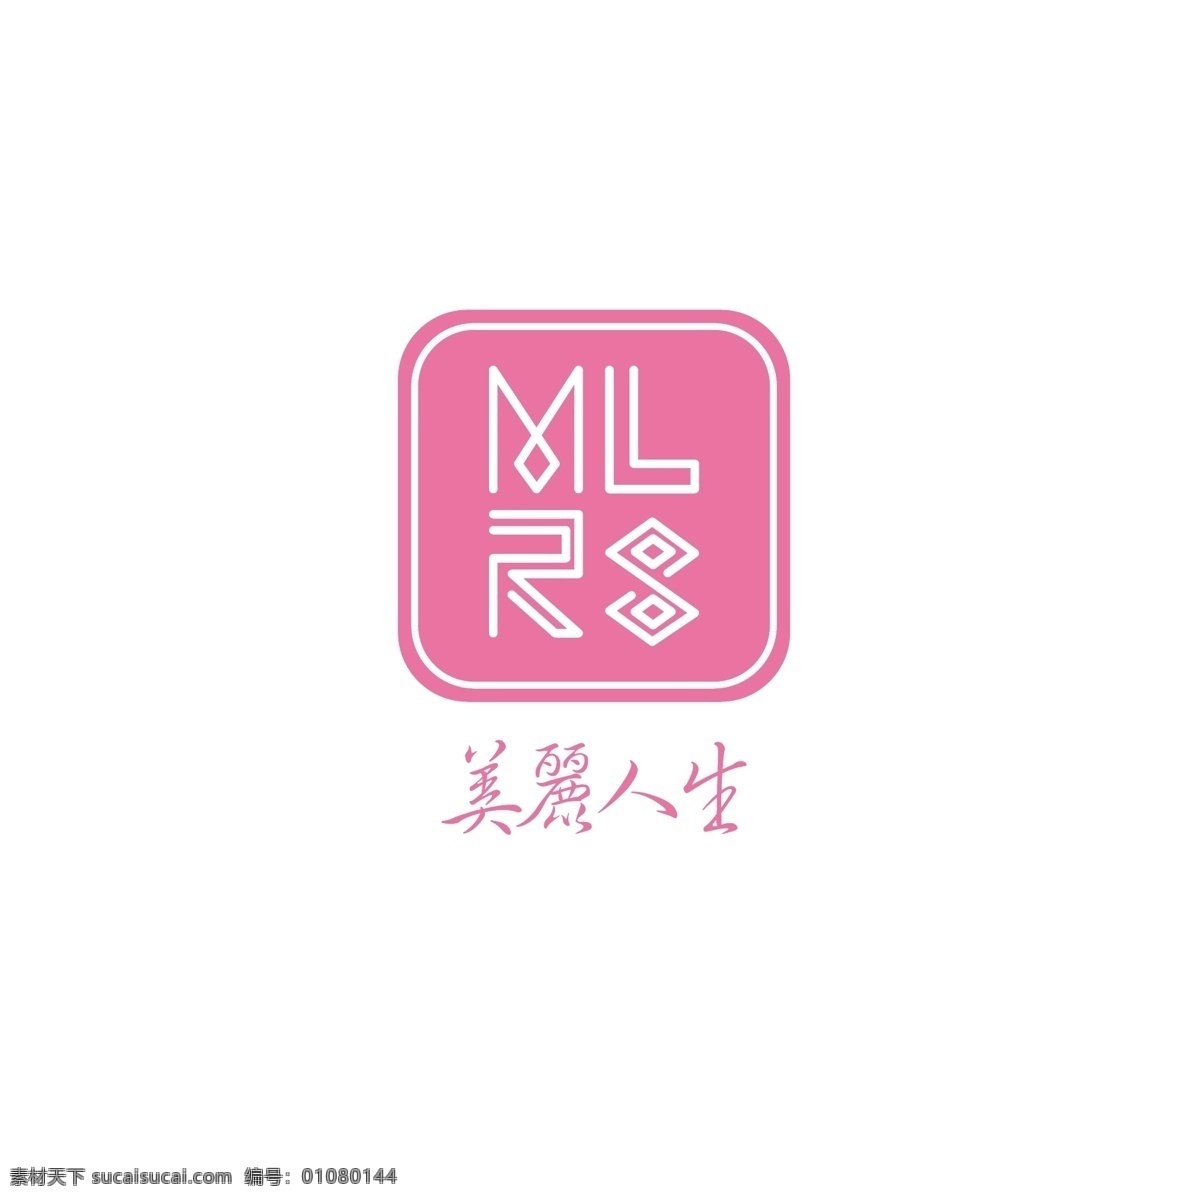 mlrs 字母 ui 图标 企业 女性 粉红色 公司 商标 logo 美丽人生